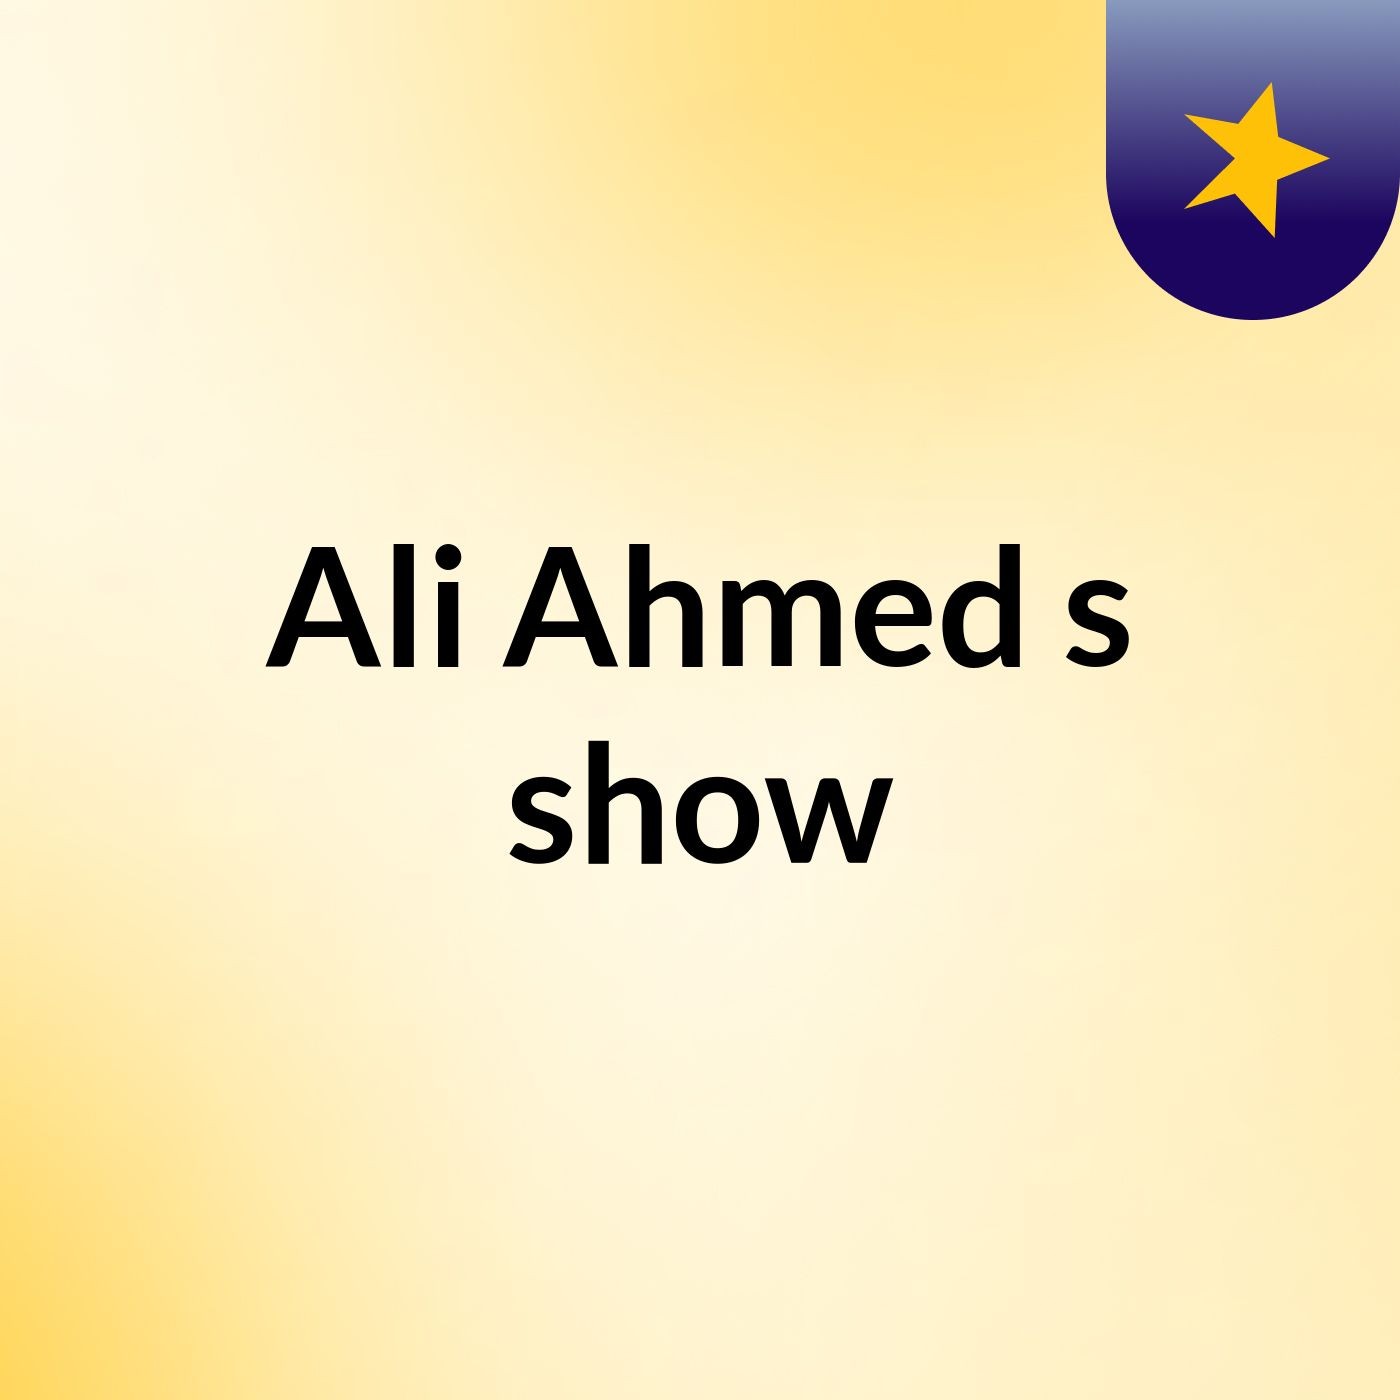 Ali Ahmed's show